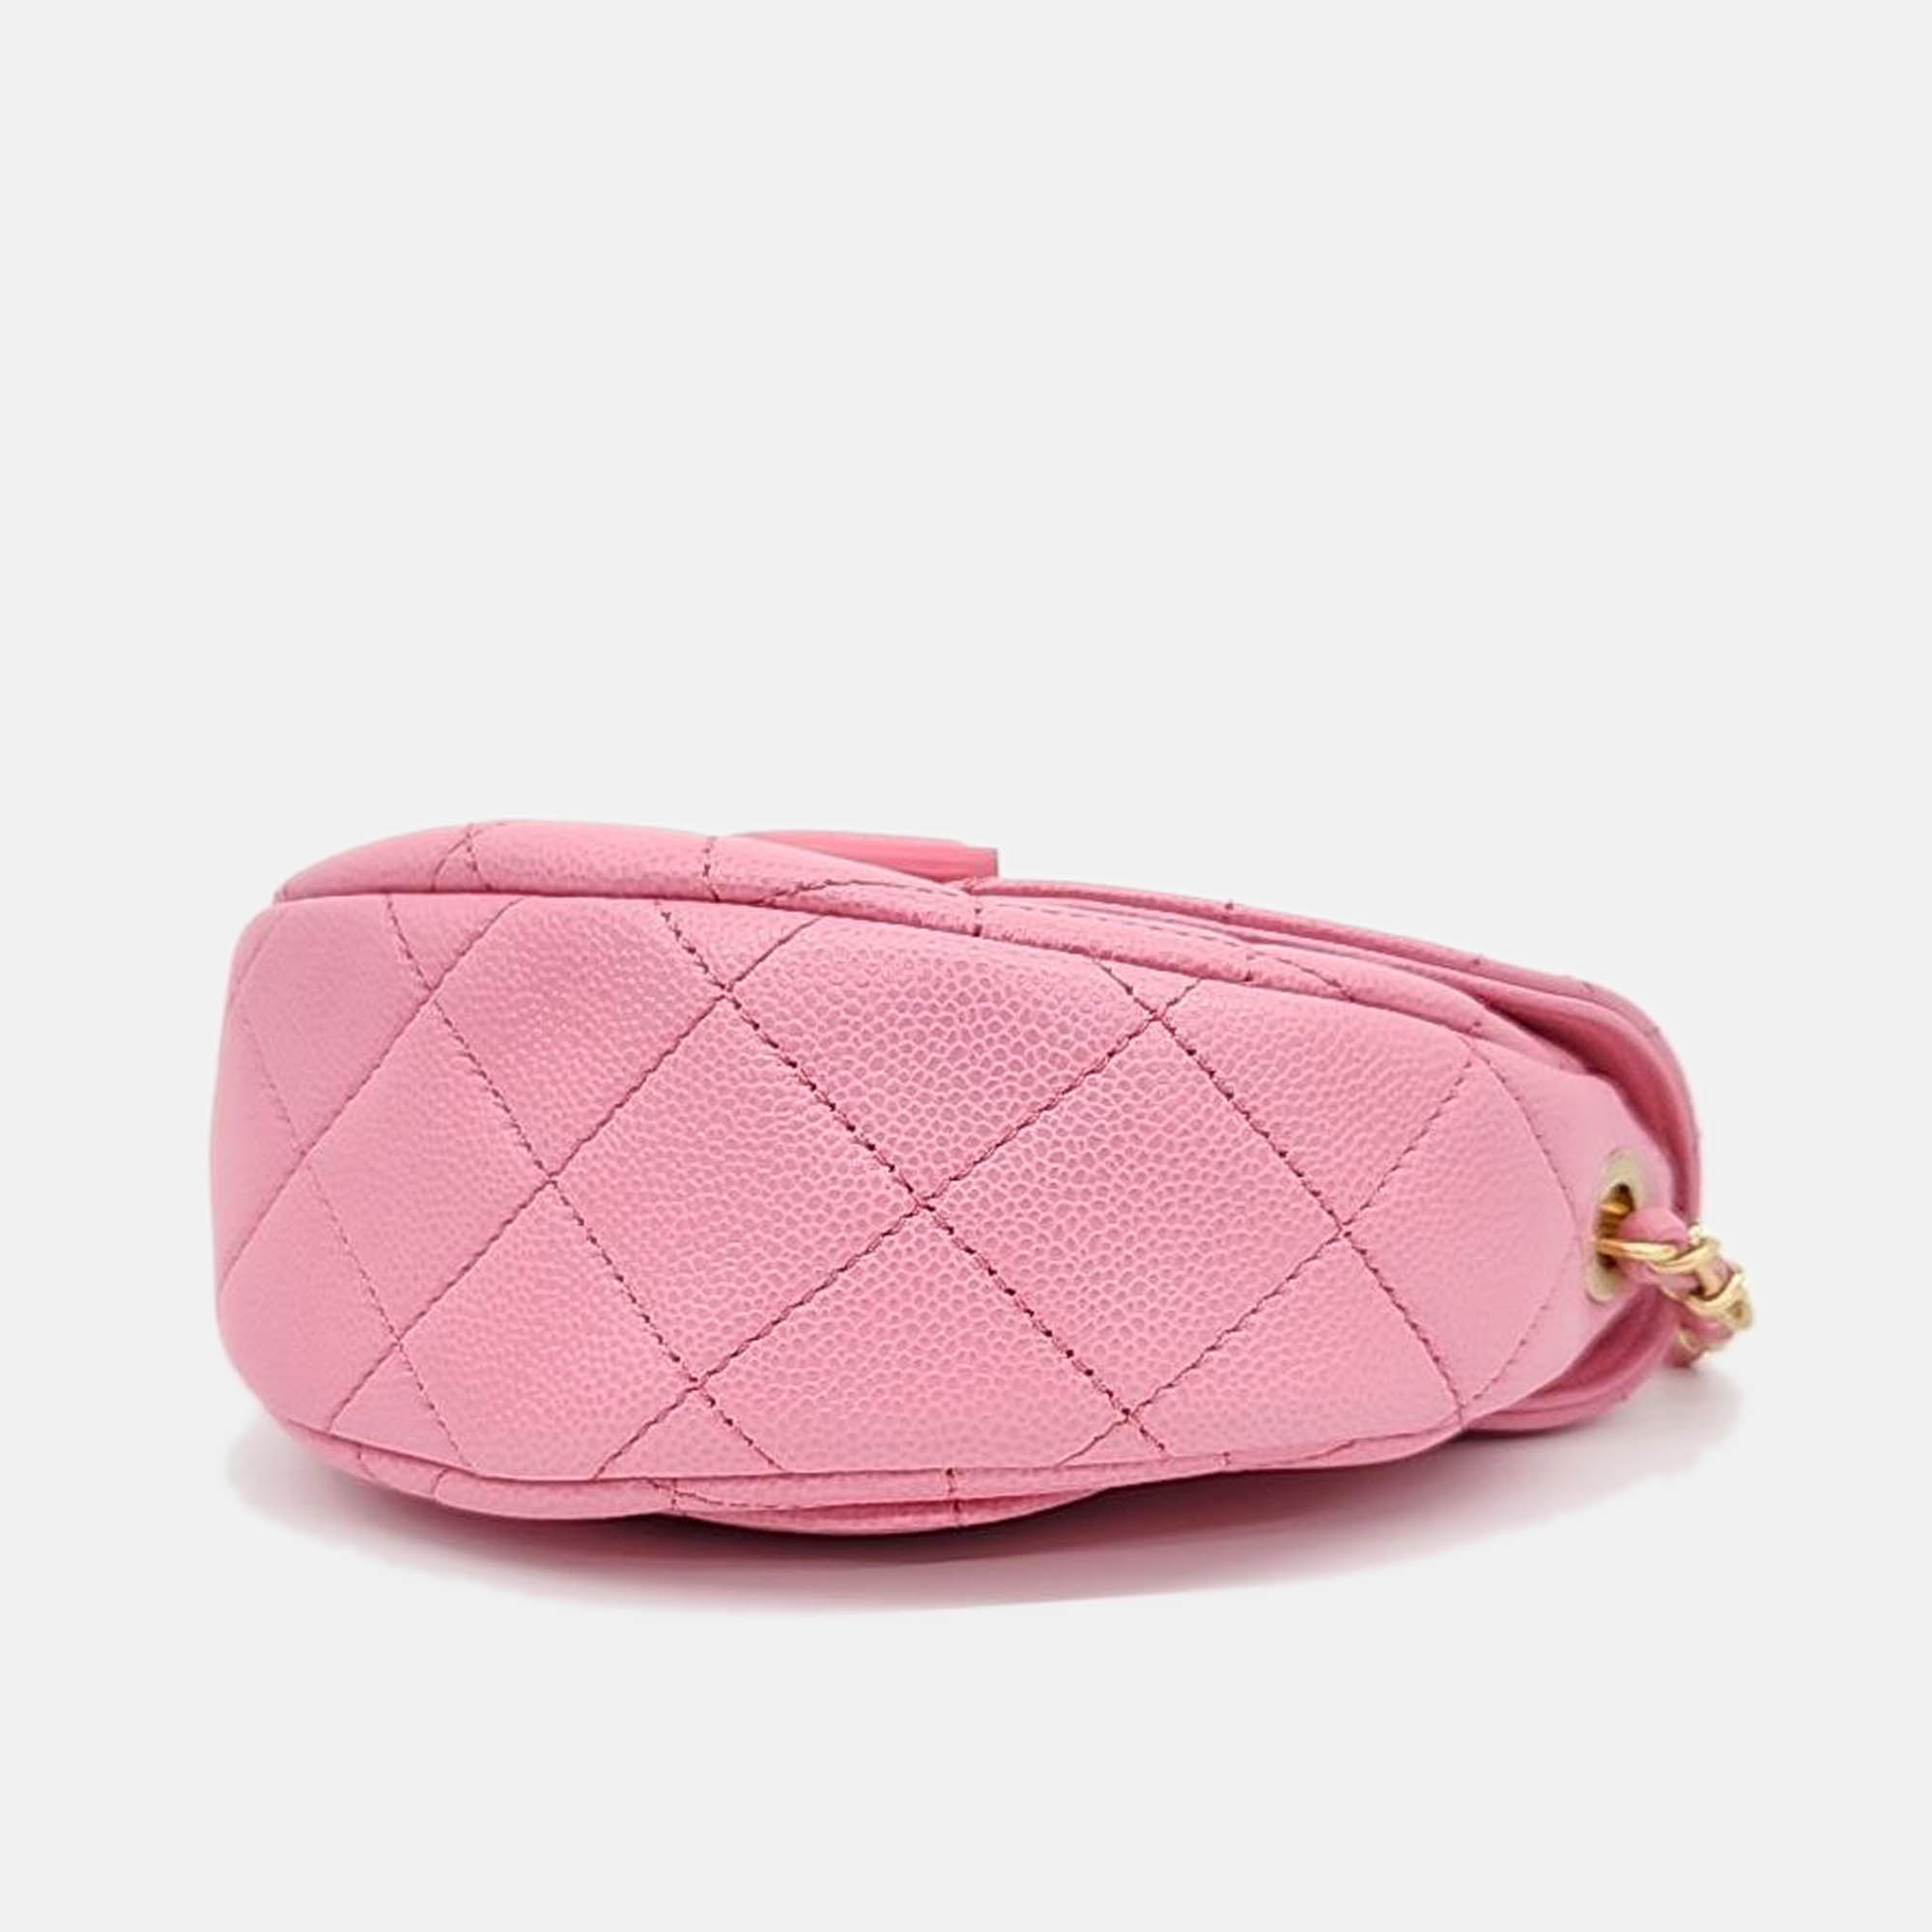 Chanel Pink Caviar Cross Bag